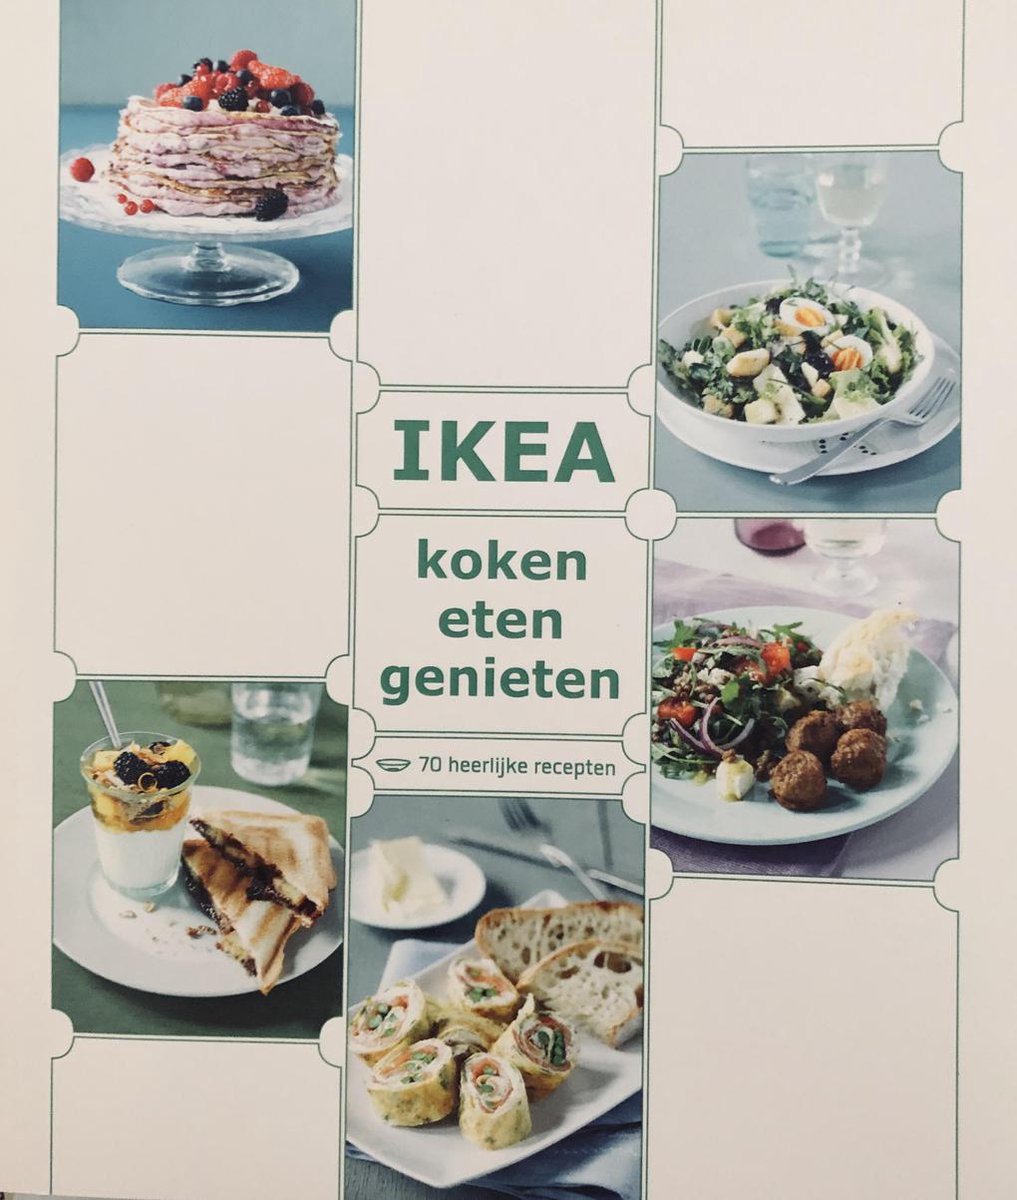 Ikea koken eten genieten